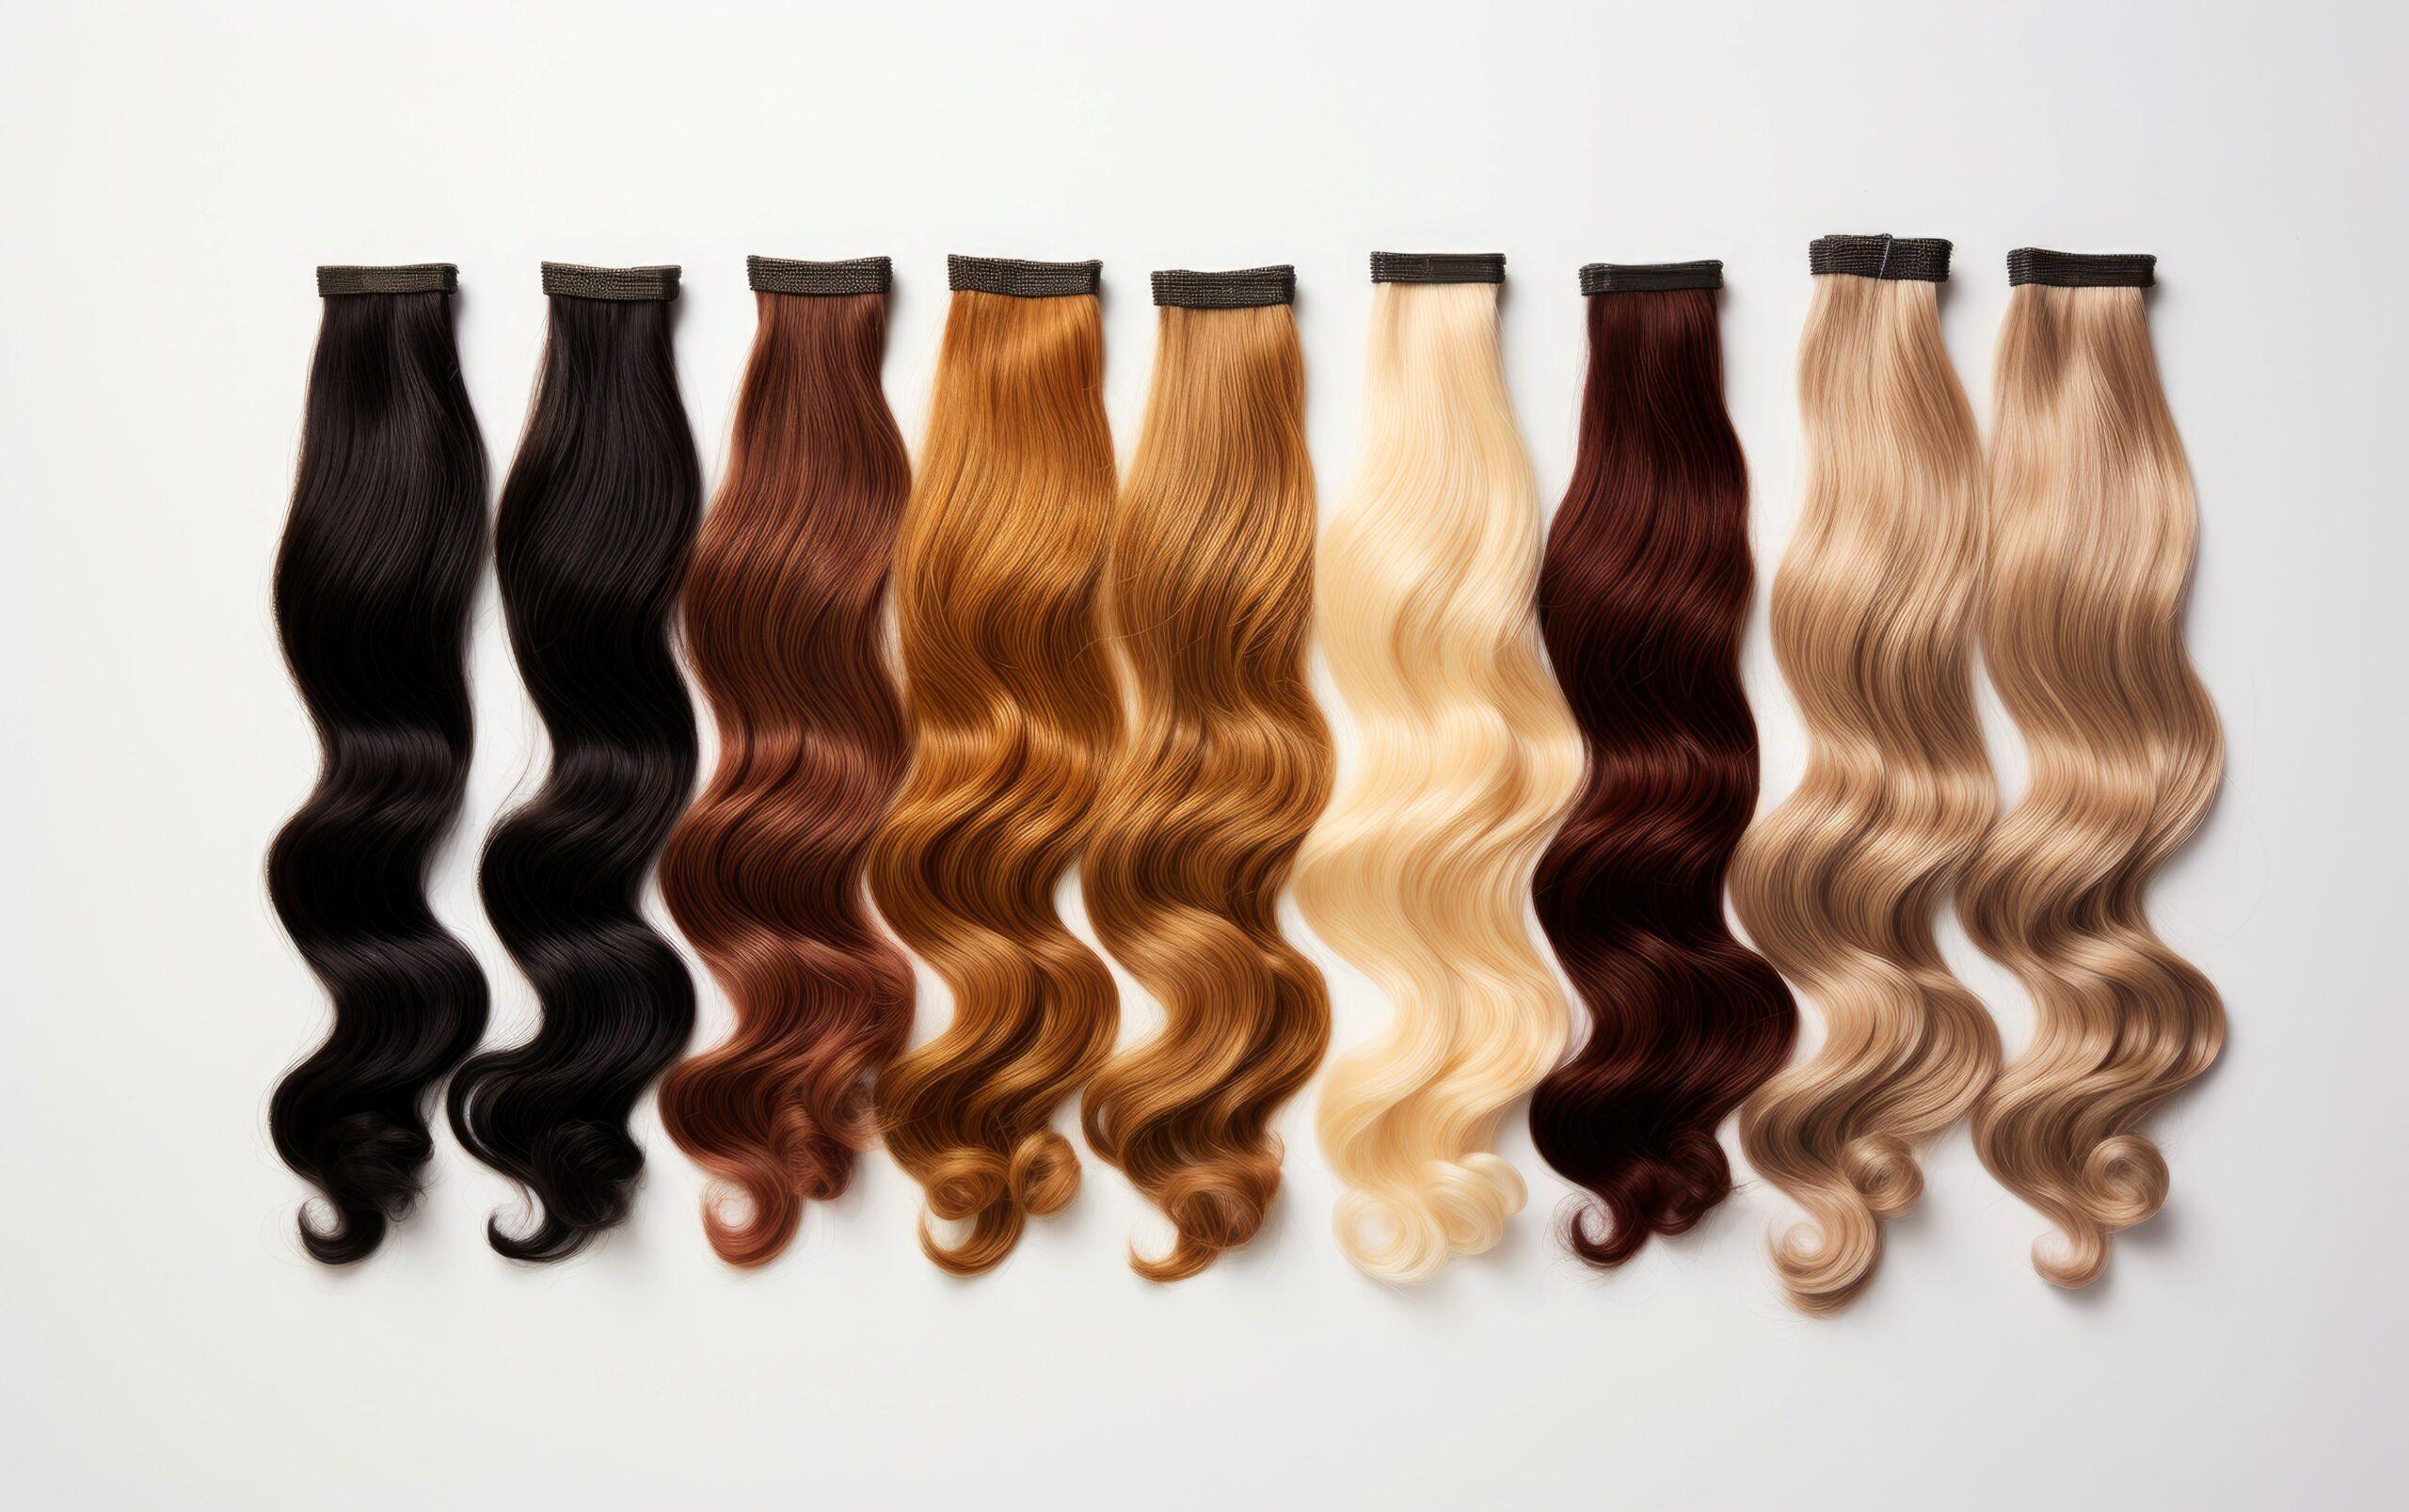 Haarverlängerungsbündel in verschiedenen Farben. Extensions